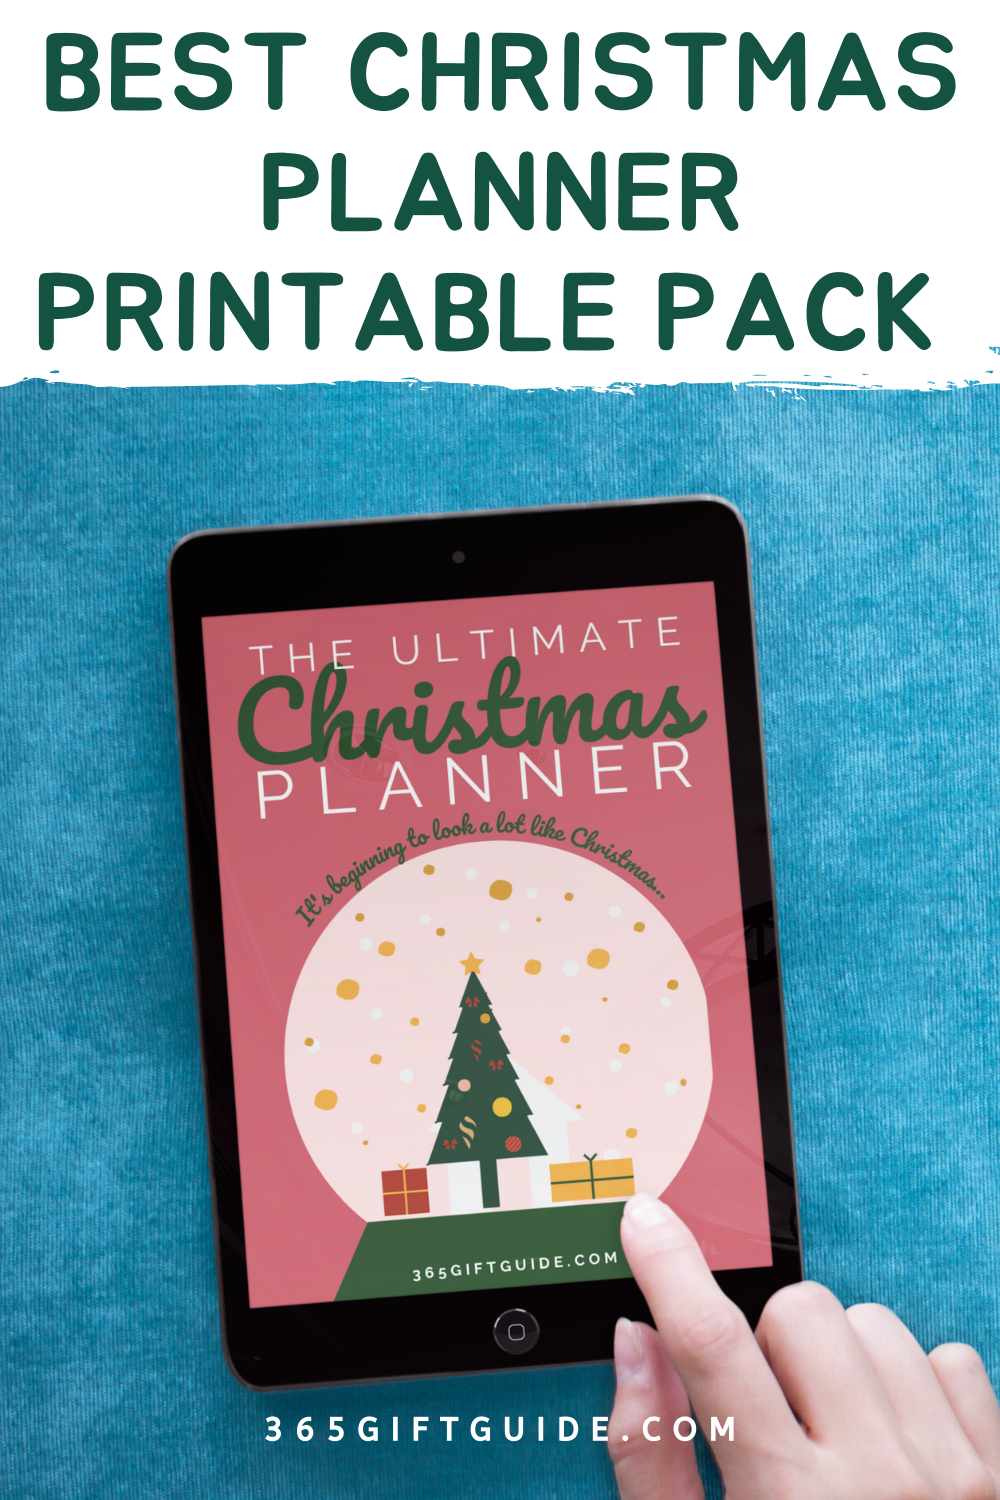 Best Christmas Planner Printable Pack